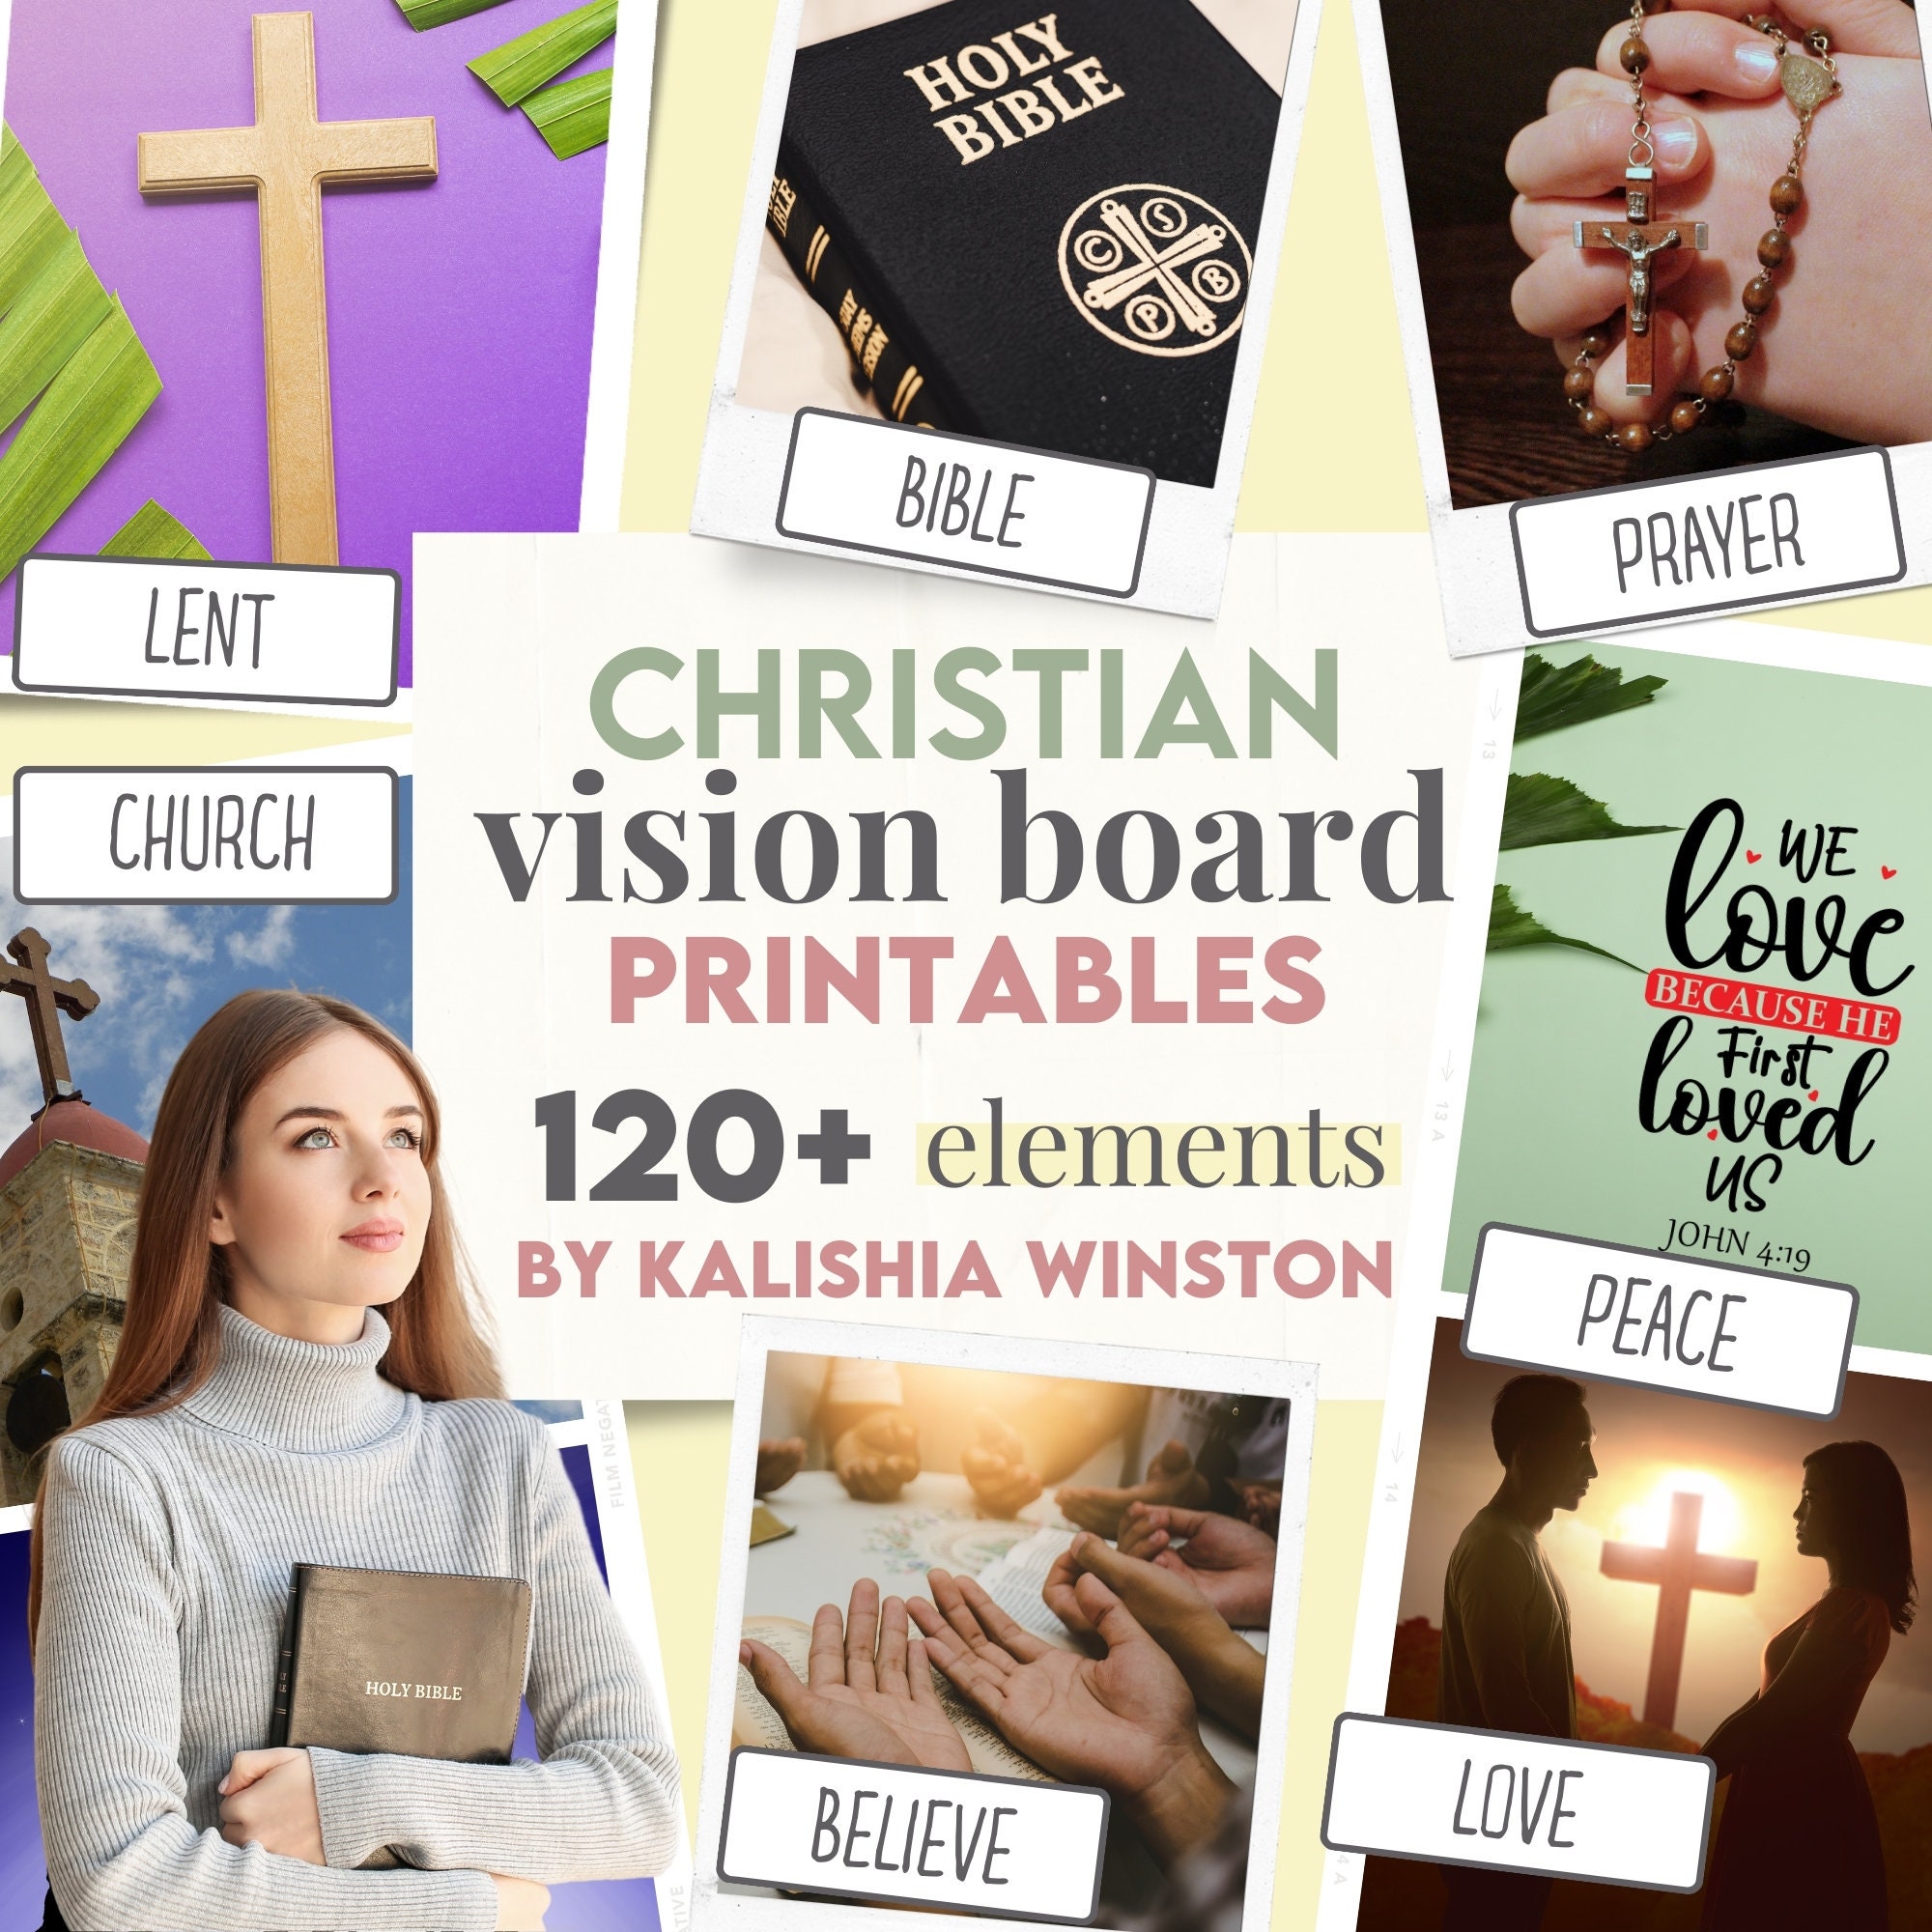 Printable Prayer Board Kit, Prayer Cards, Christian Wall Collage, Bible  Verses, Scripture on Prayer Enhance Your Prayer Life 